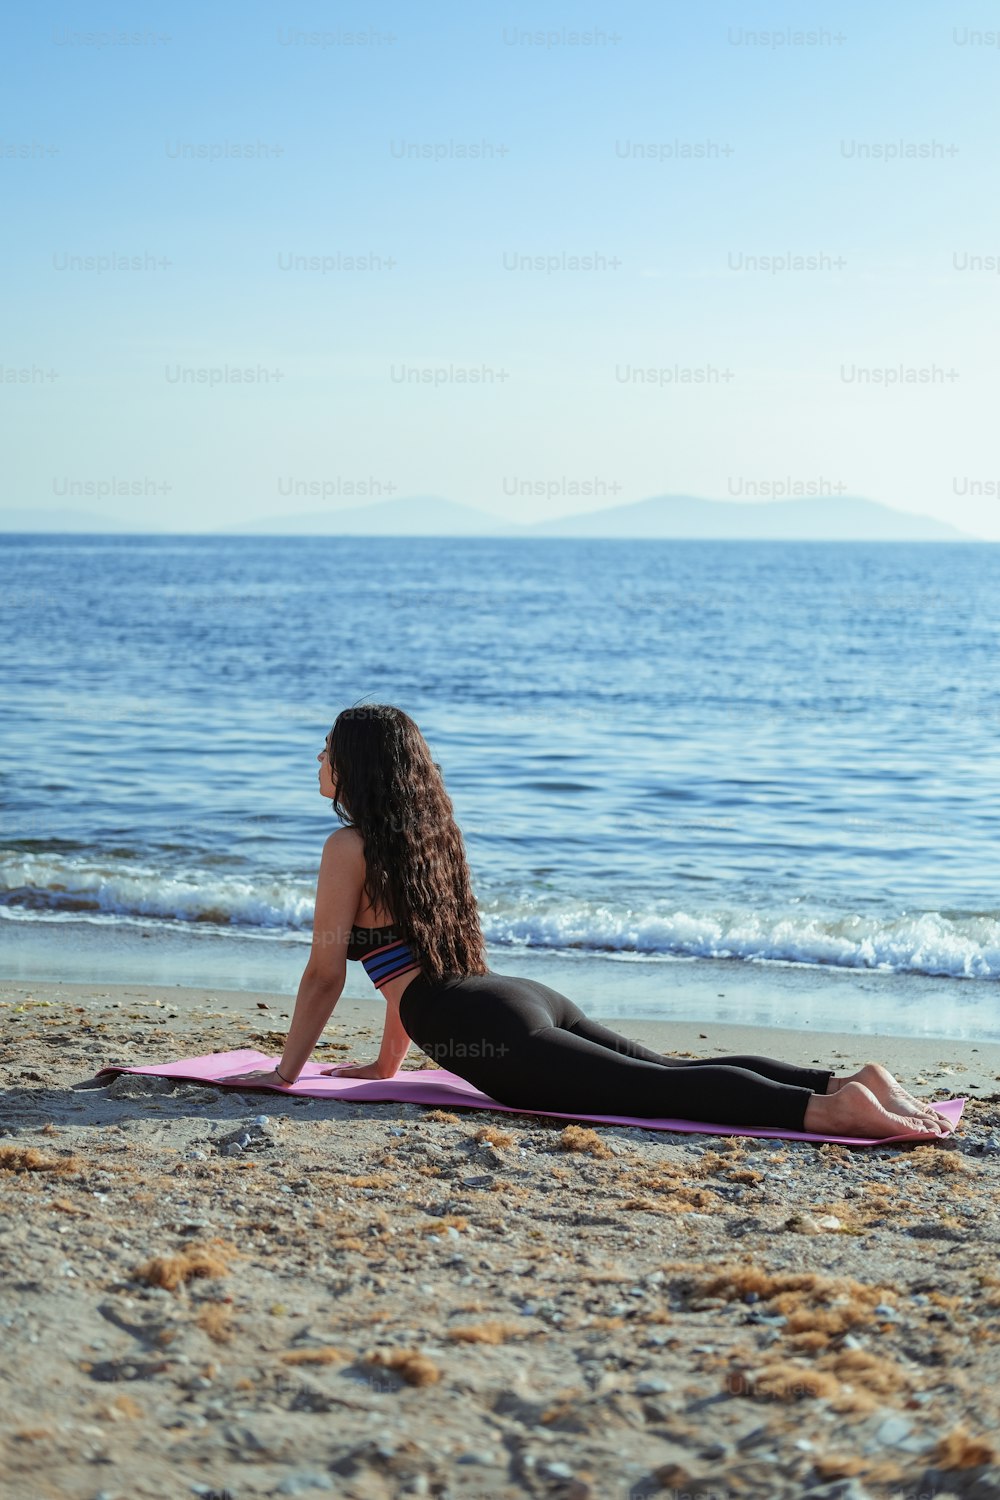 A woman doing a yoga pose on a beach photo – Pilates Image on Unsplash